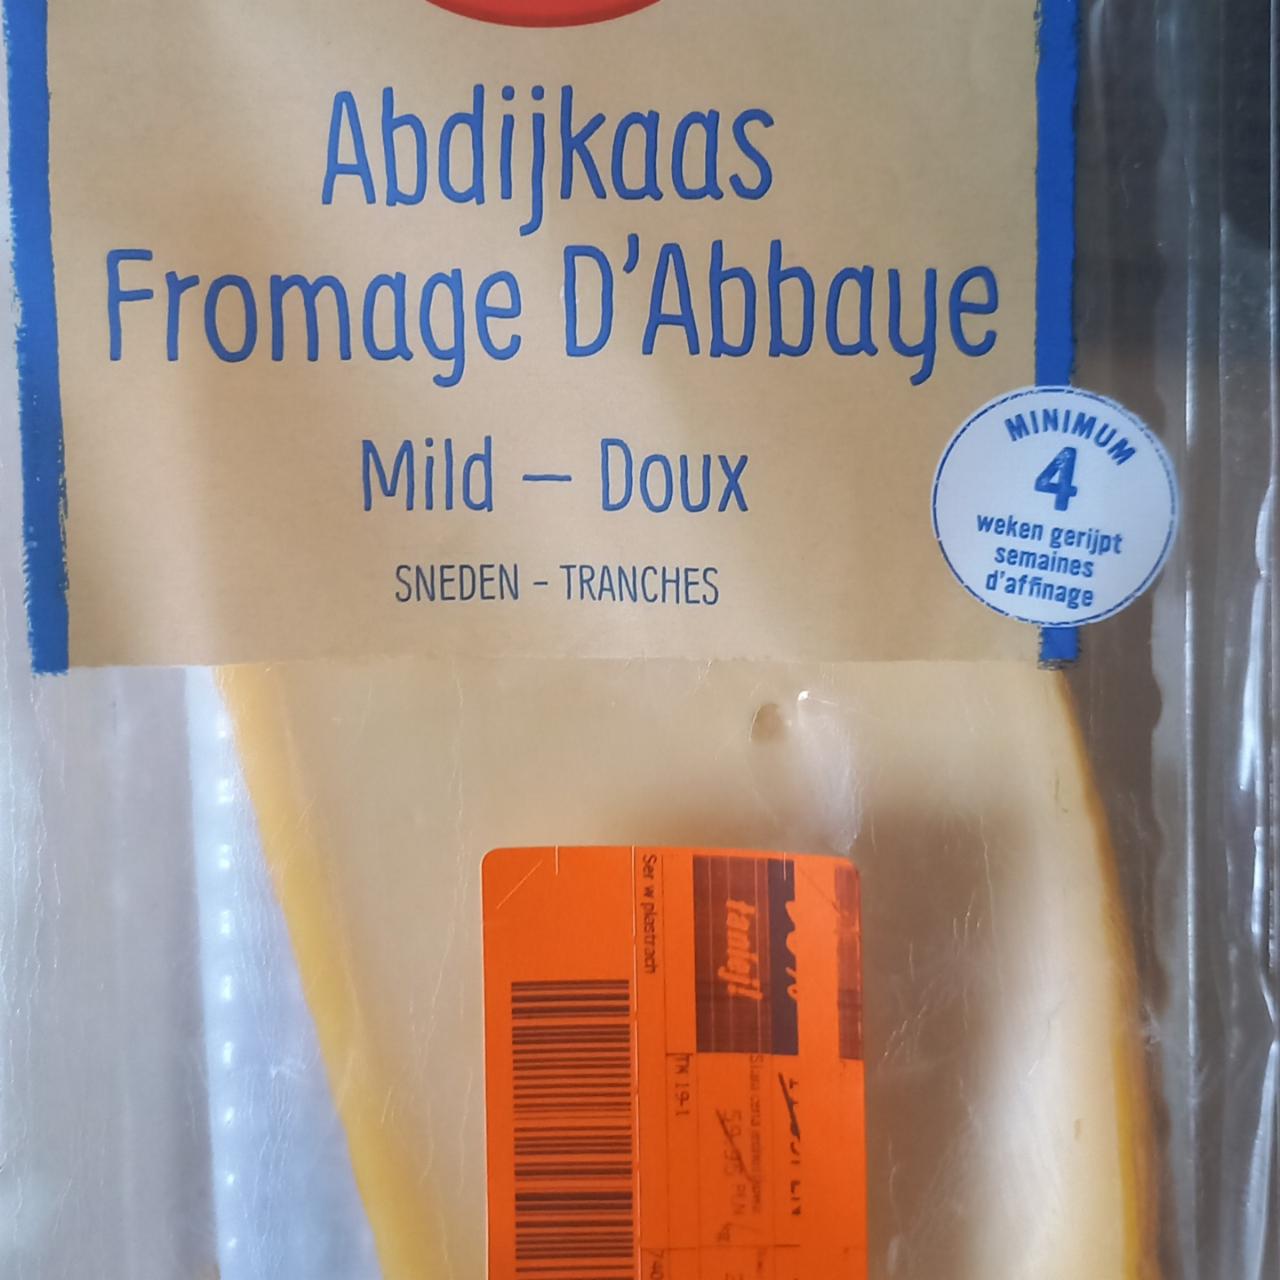 Zdjęcia - Ser abdijkaas fromage dabbaye mild doux Milbona